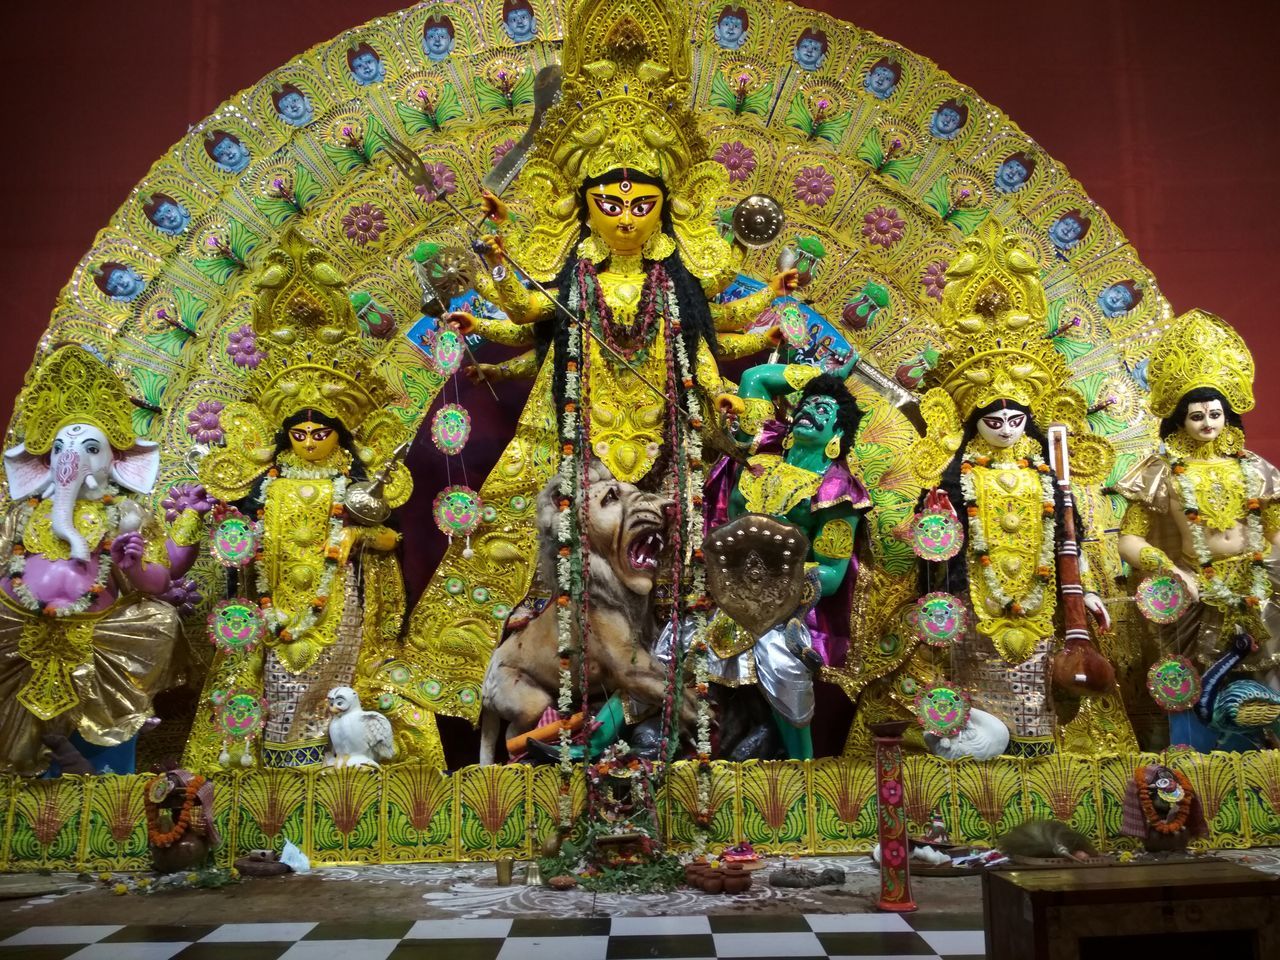 Of Devi Durga and her children religion